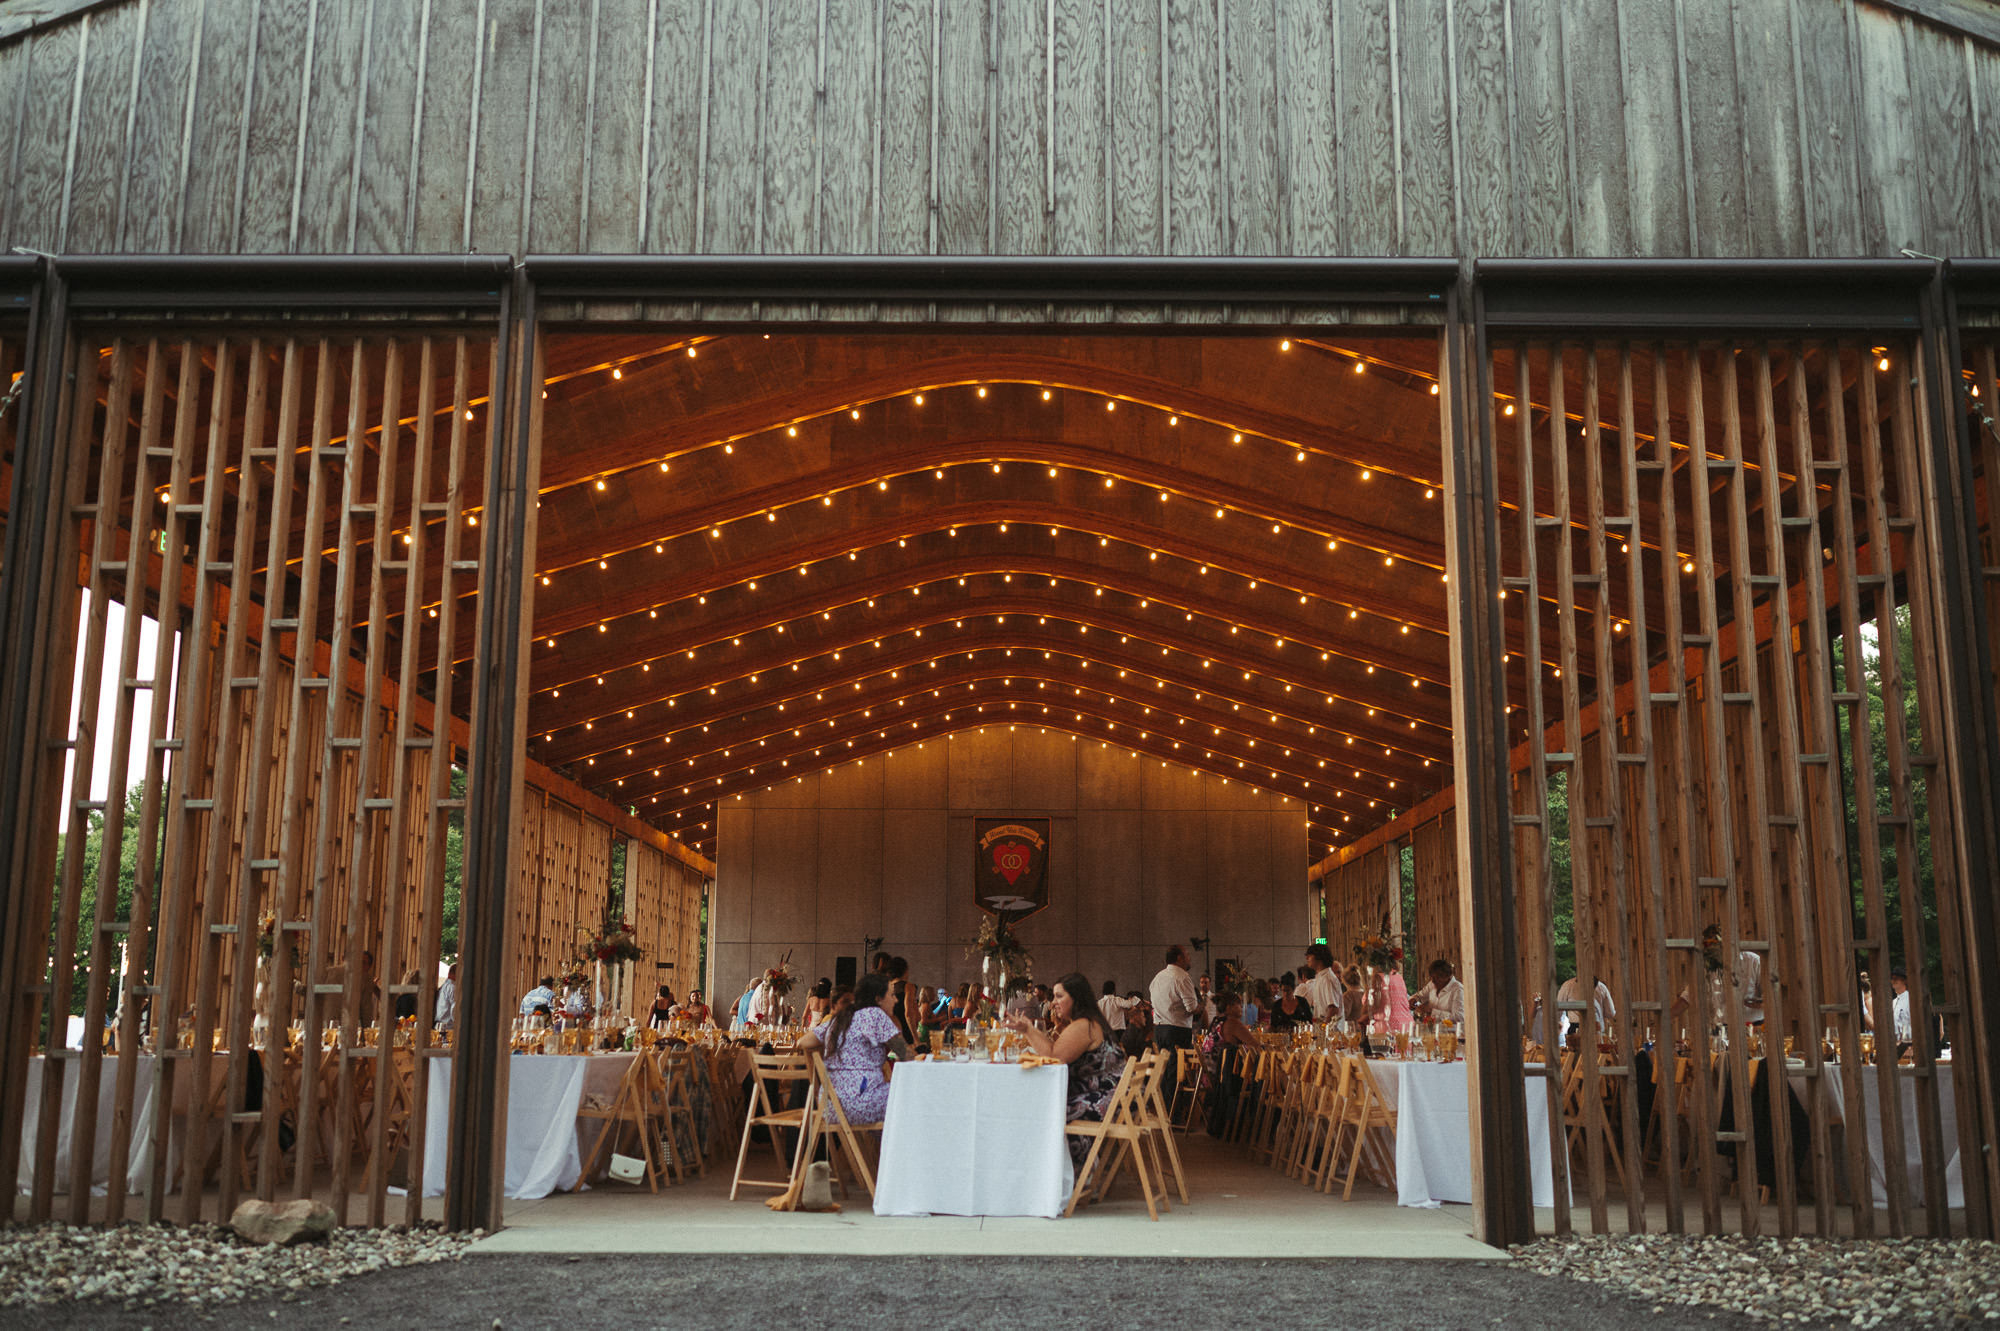 Wedding reception at Gather Greene, Upstate new york barn wedding venue